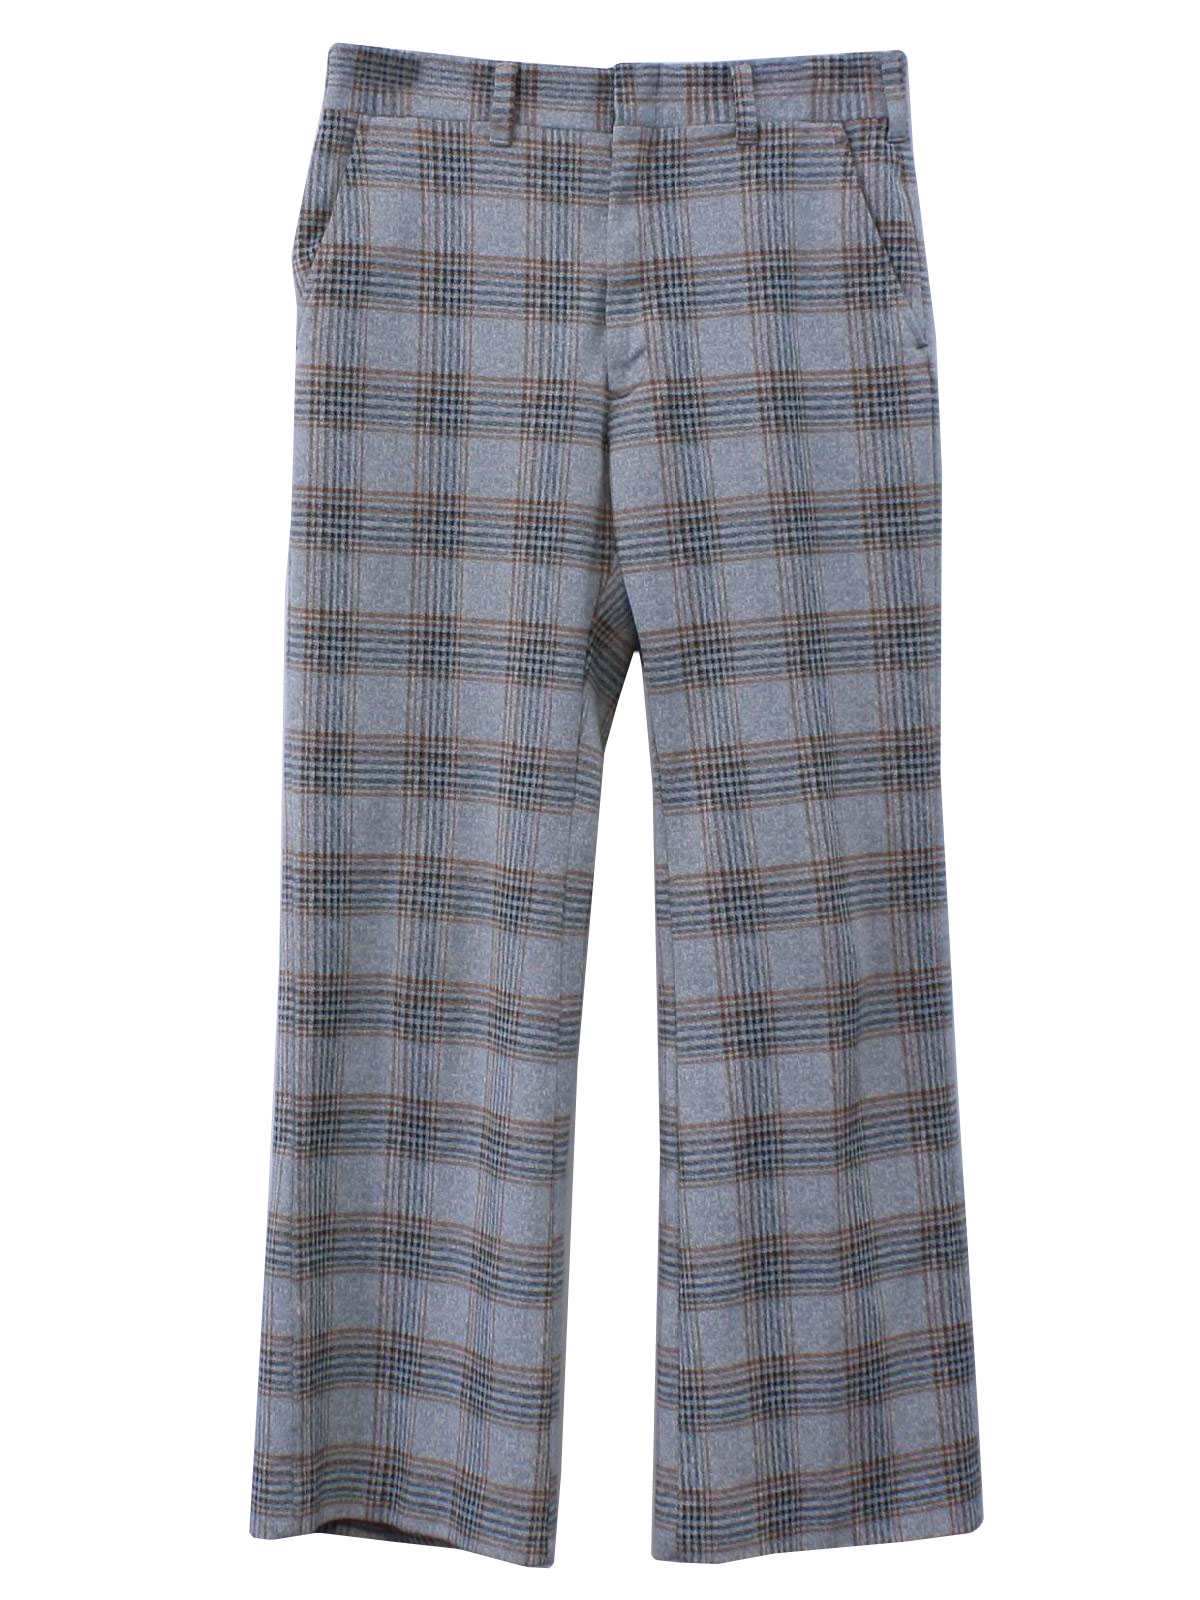 Seventies Vintage Pants: 70s -Haggar Slacks- Mens gray background with ...